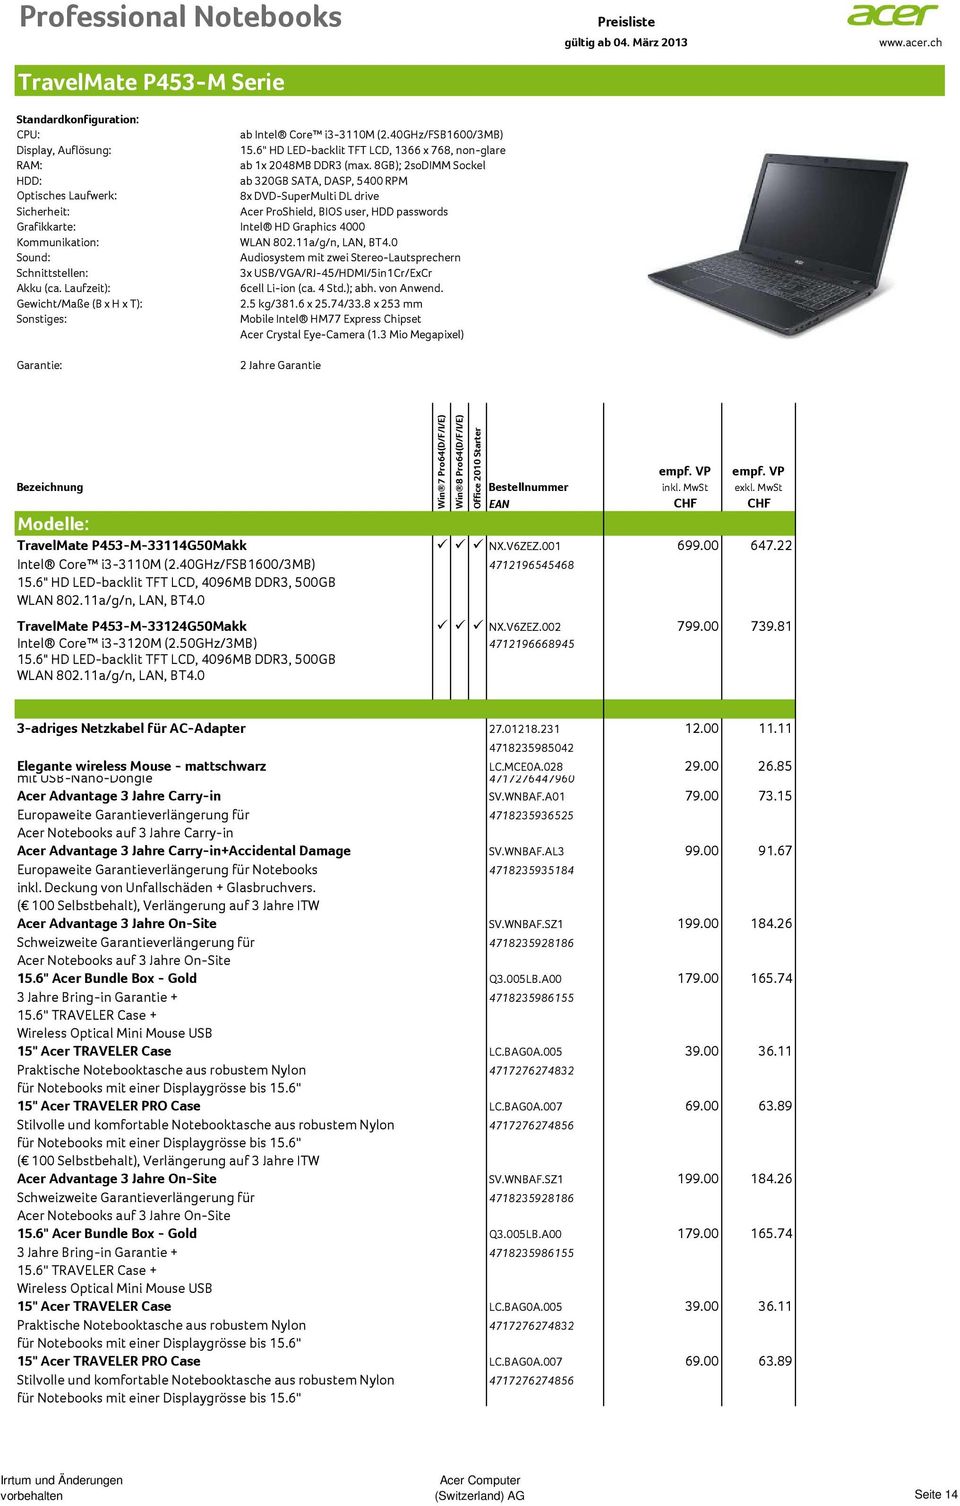 USB/VGA/RJ-45/HDMI/5in1Cr/ExCr 6cell Li-ion (ca. 4 Std.); abh. von Anwend. Gewicht/Maße (B x H x T): 2.5 kg/381.6 x 25.74/33.8 x 253 mm Acer Crystal Eye-Camera (1.